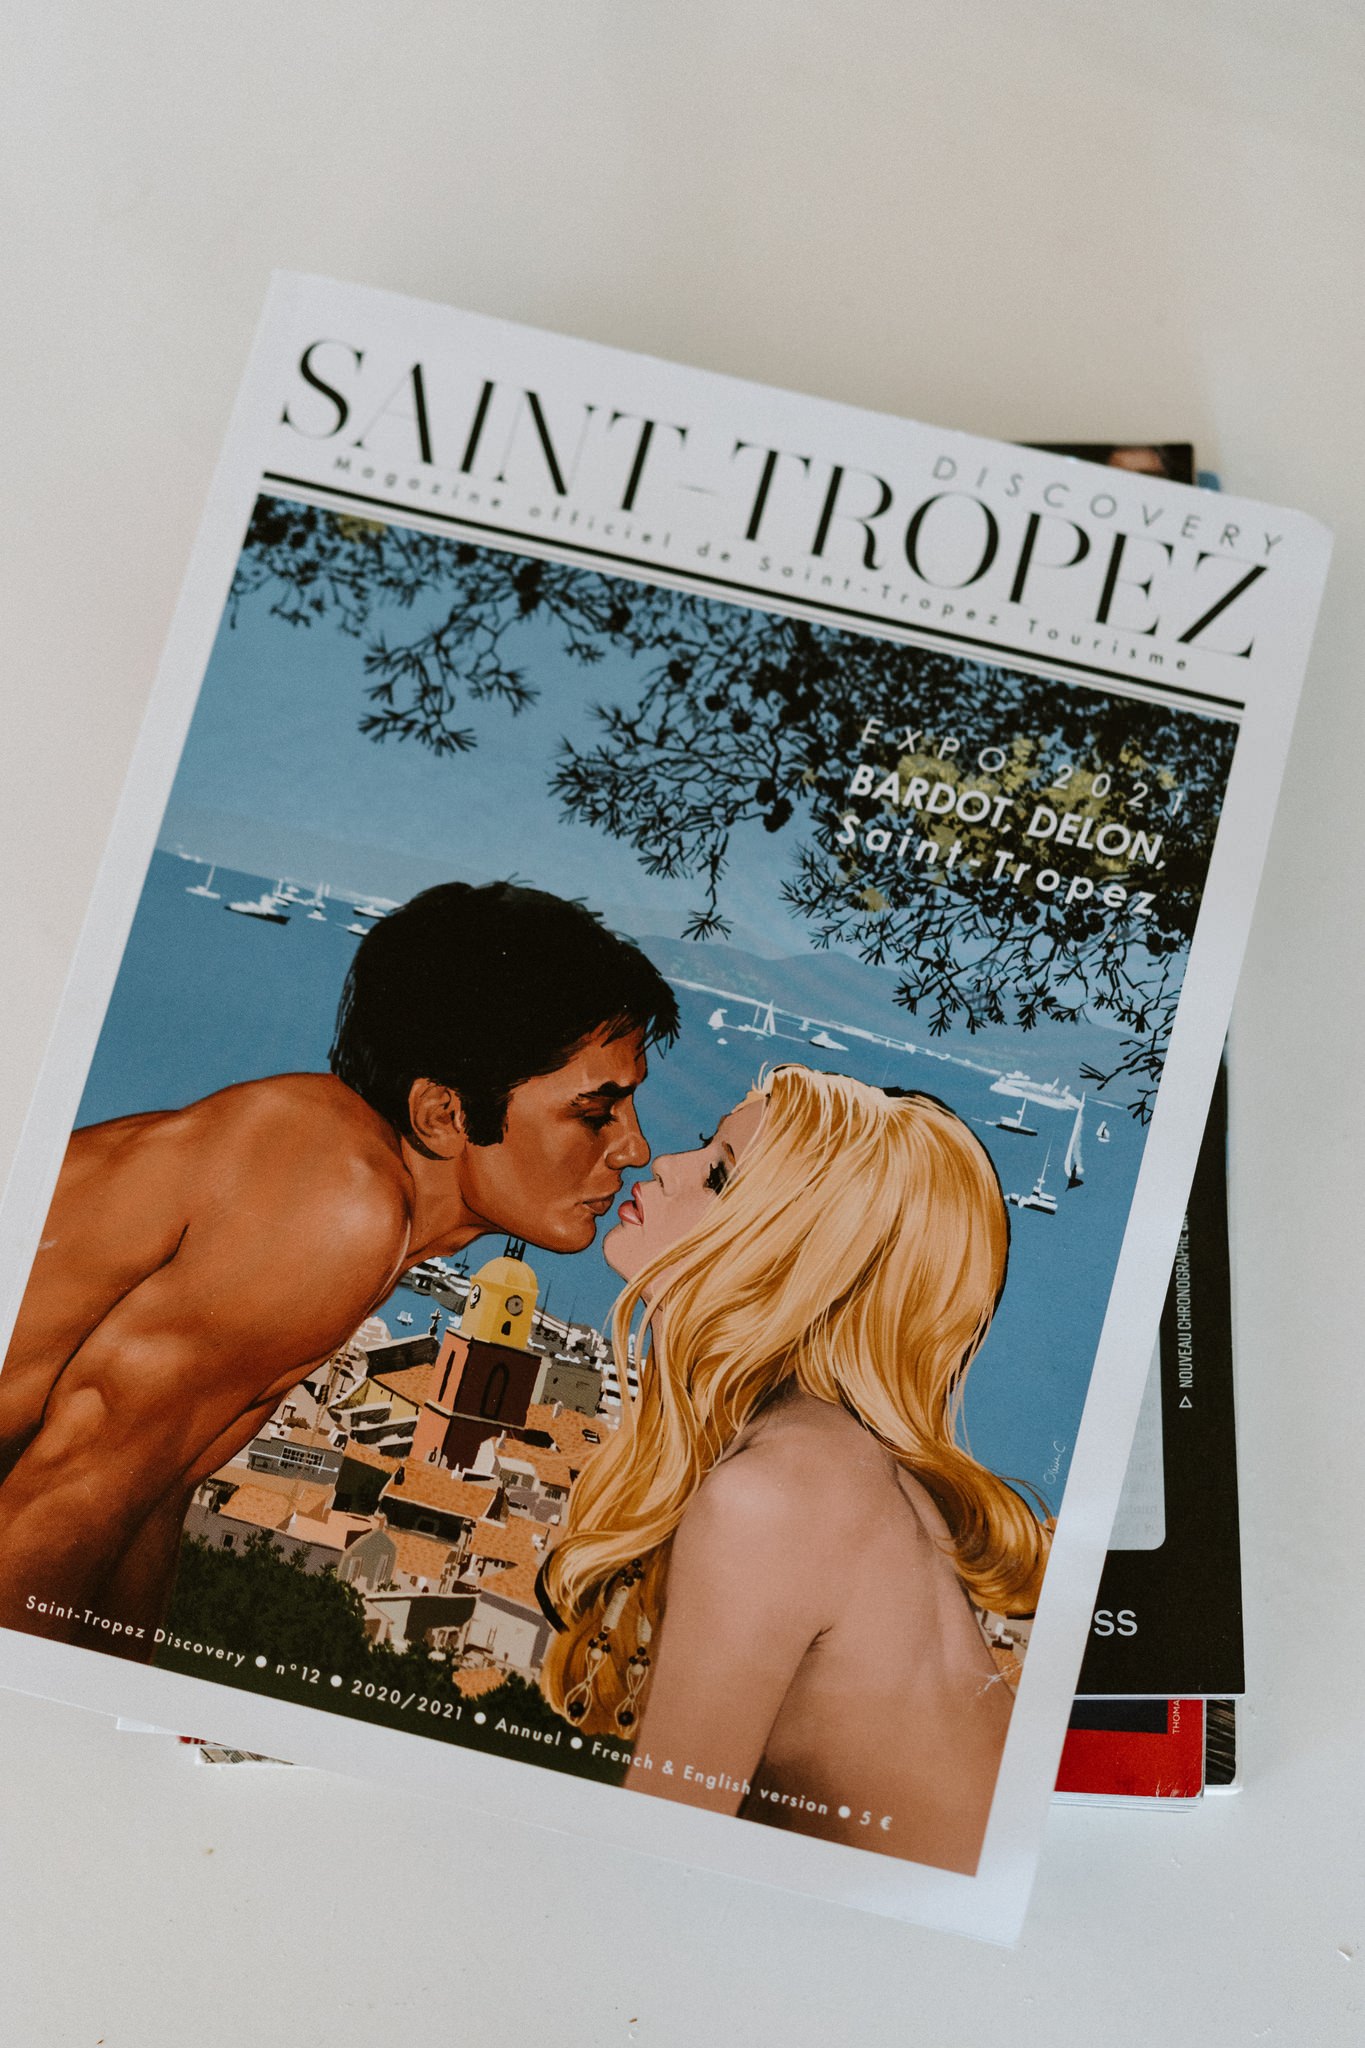 Mariage de bord de mer à St Tropez - Eugénie + Matthieu - Blog Mariage Madame C